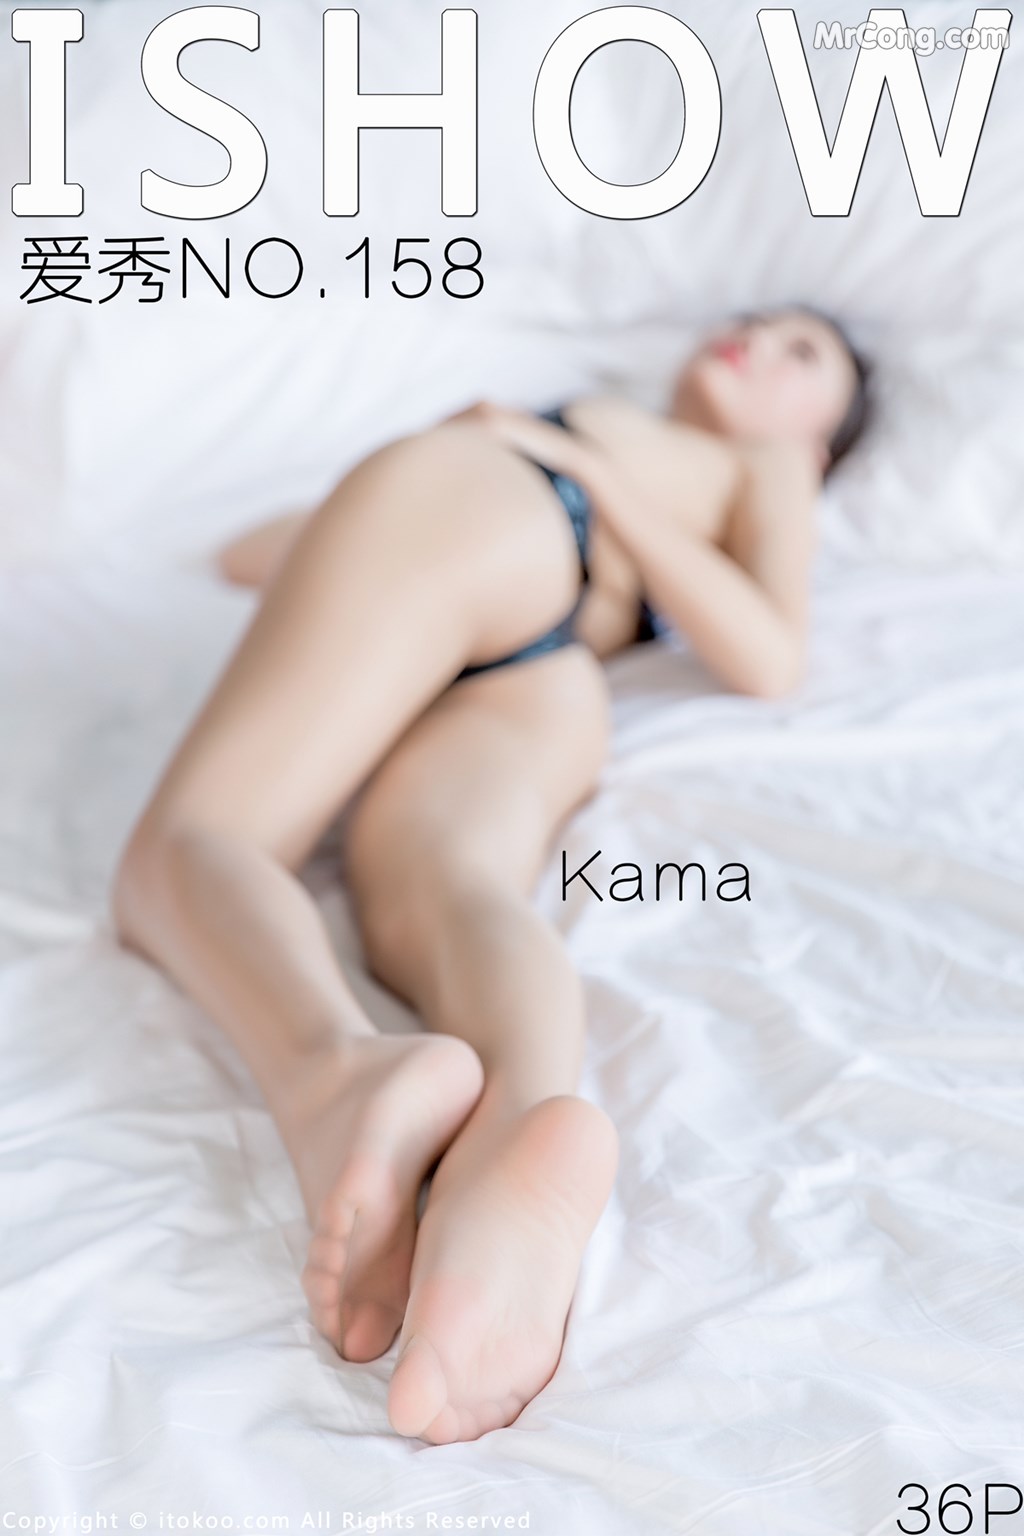 ISHOW No.158: Kama Model (37 photos)